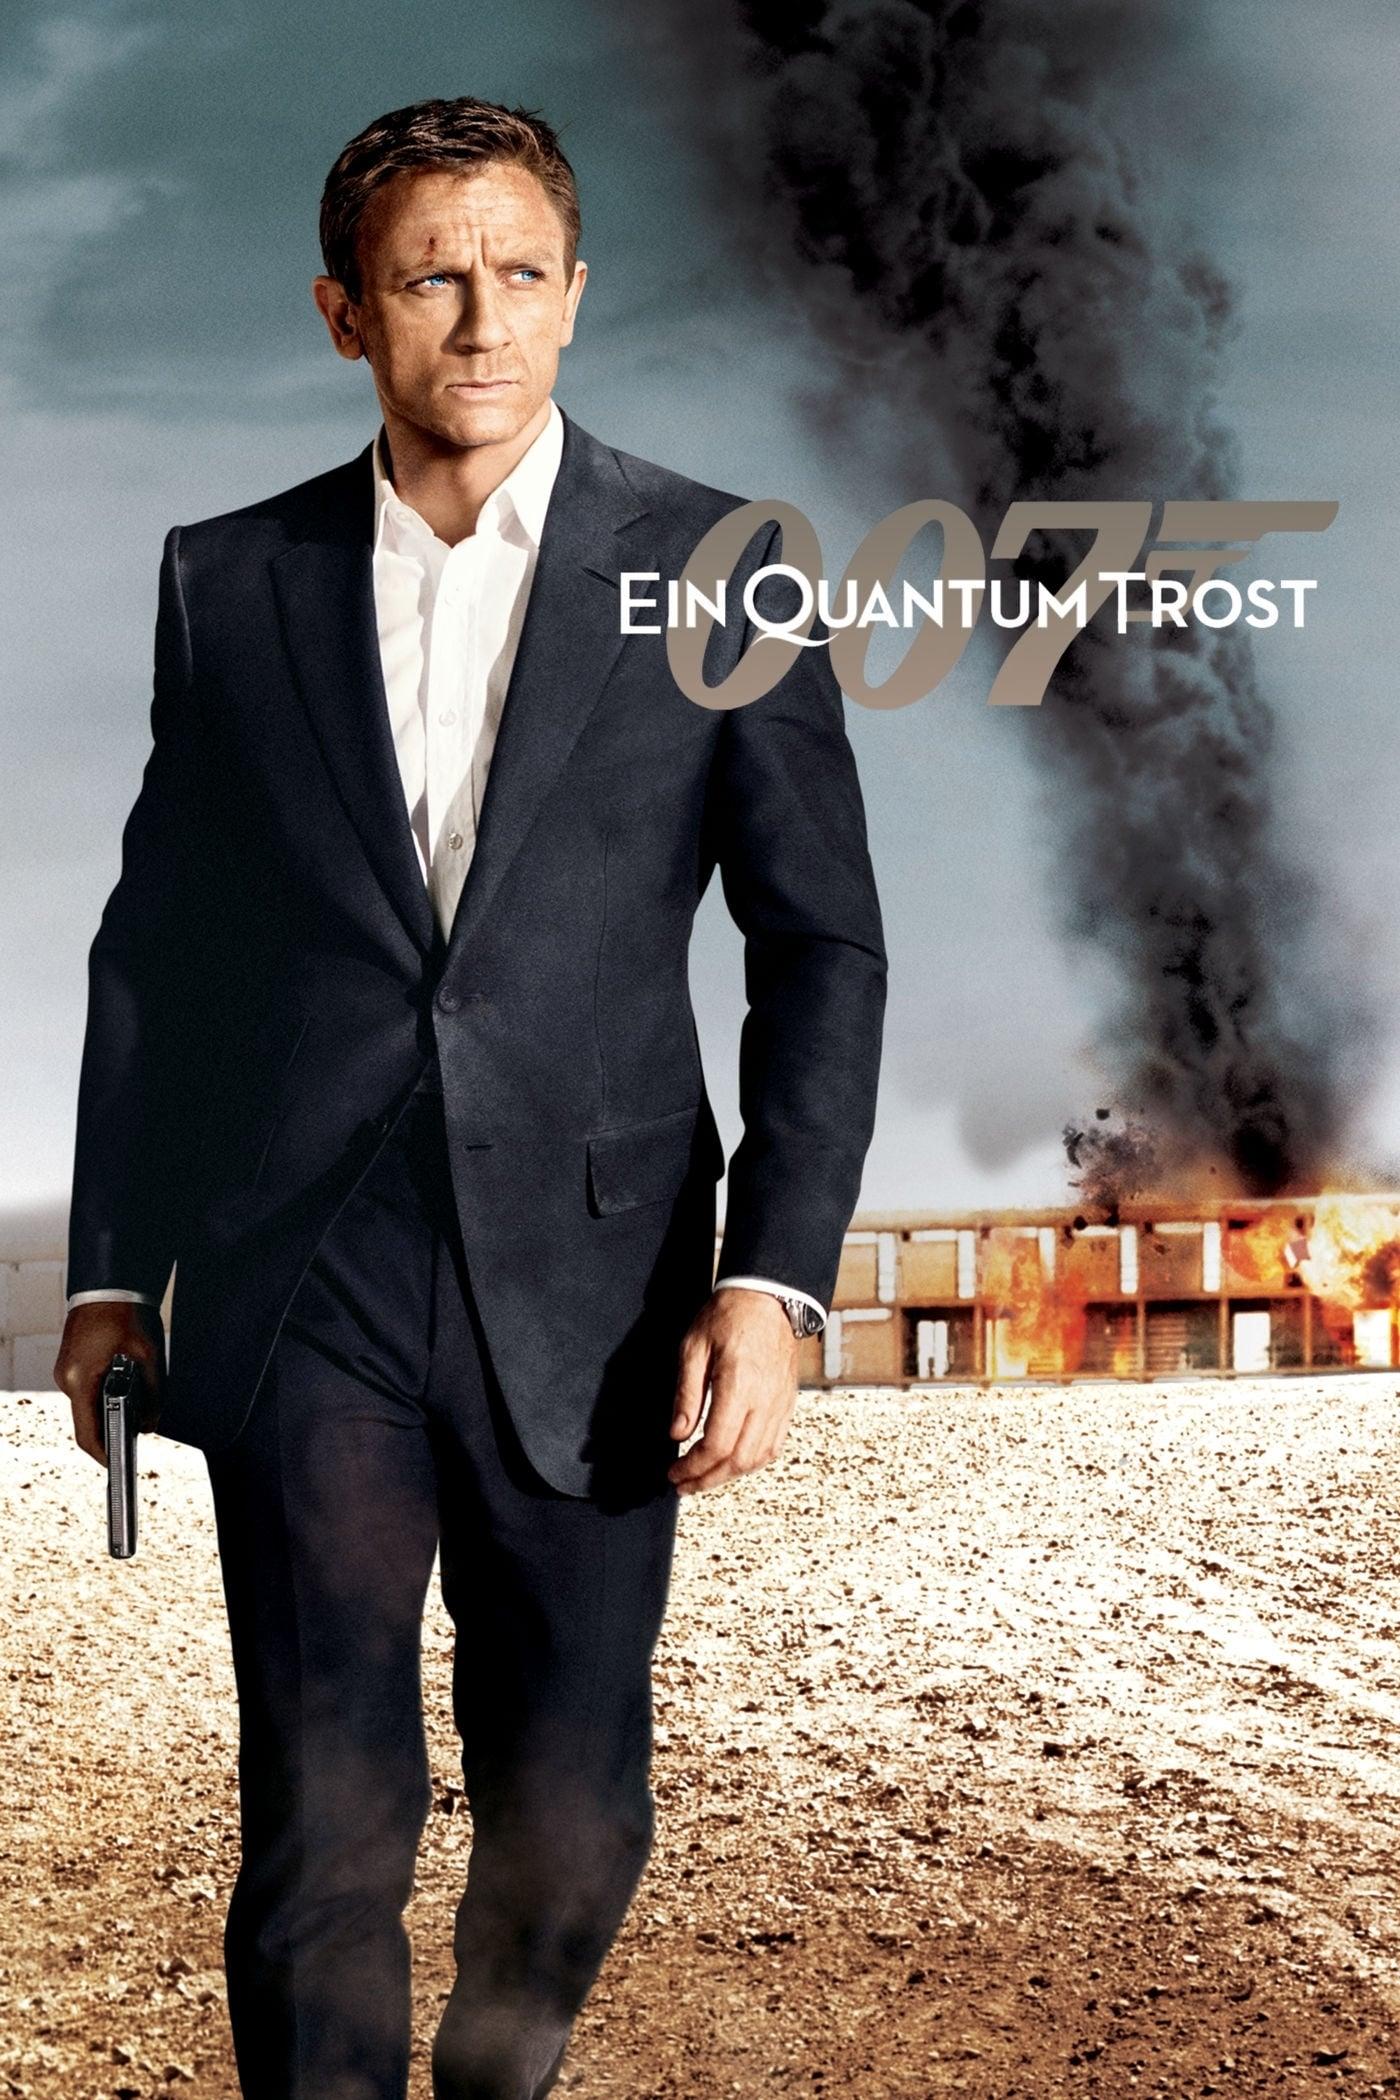 James Bond 007 - Ein Quantum Trost poster